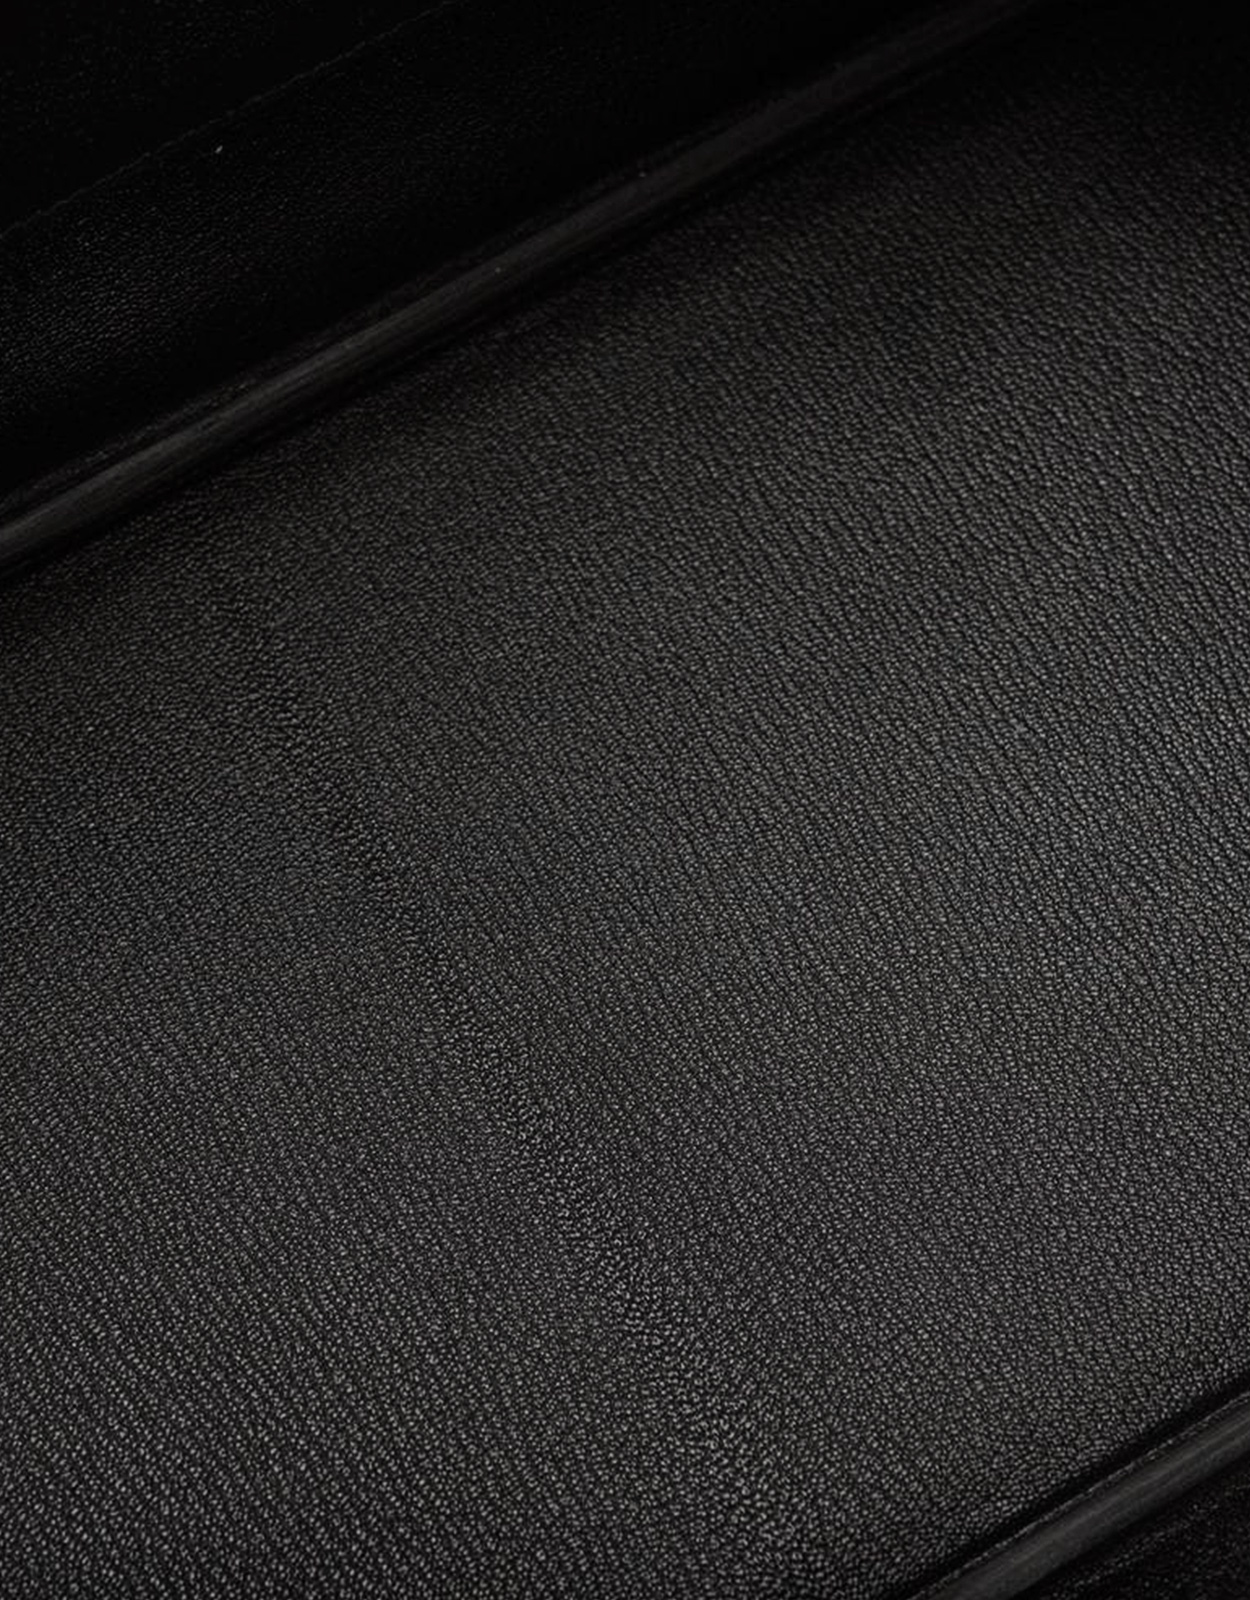 Hermès Hermès Birkin 35 Epsom Leather Handbag-Noir Silver Hardware